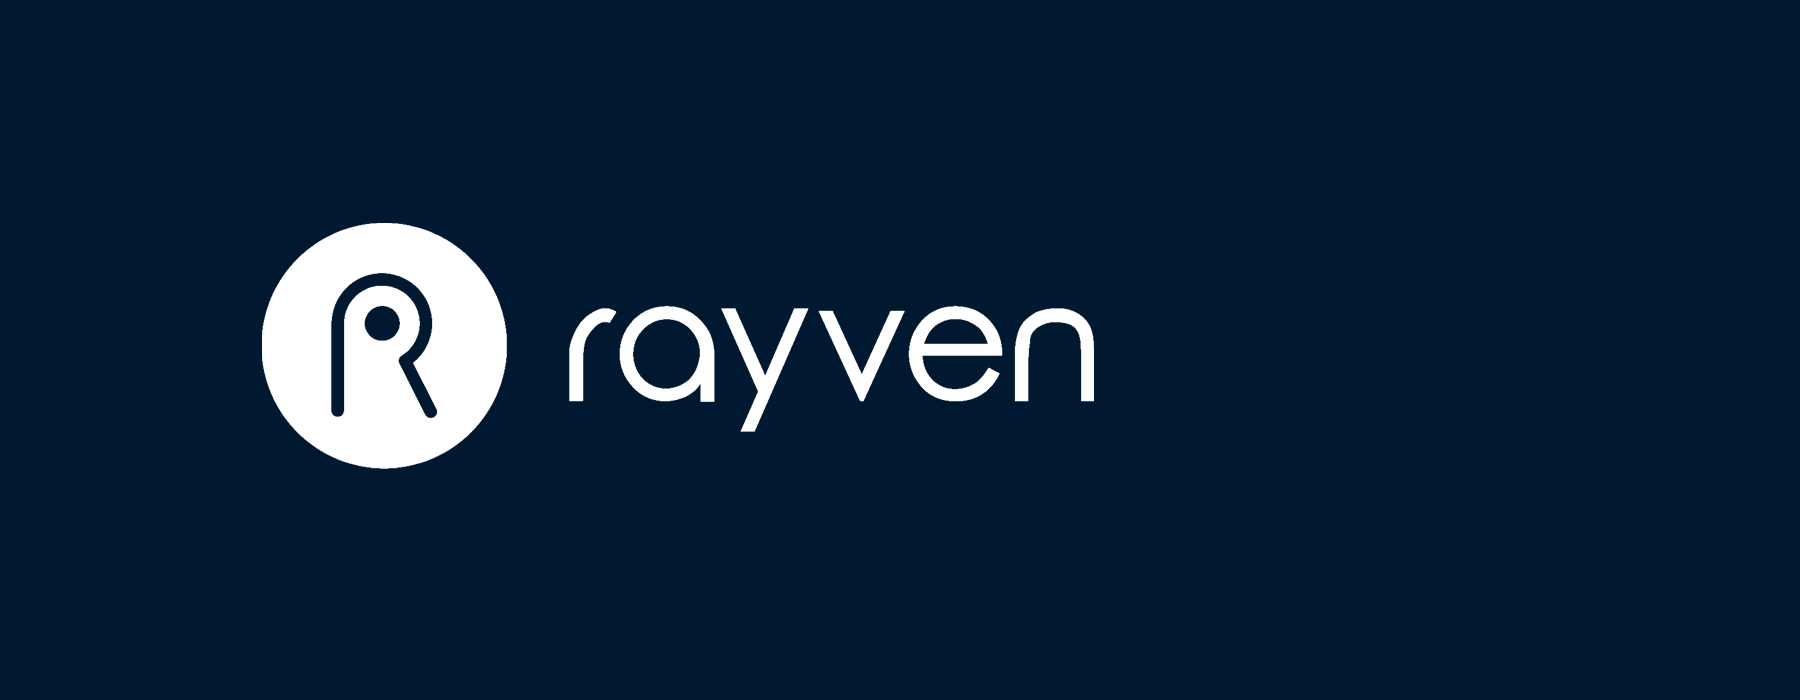 Blog-Rayven-Press-Release